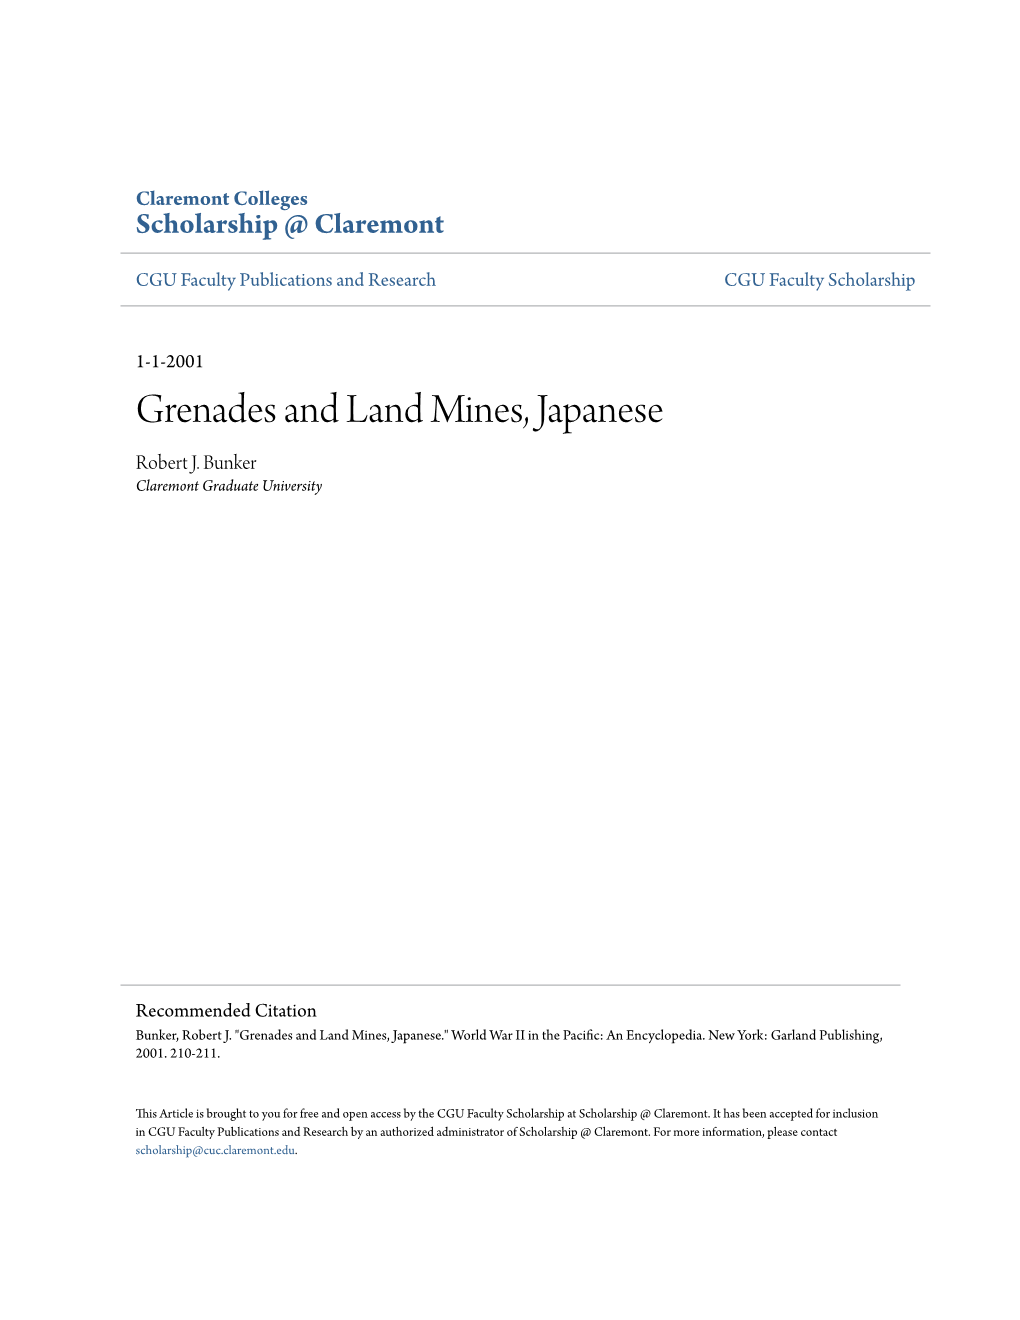 Grenades and Land Mines, Japanese Robert J